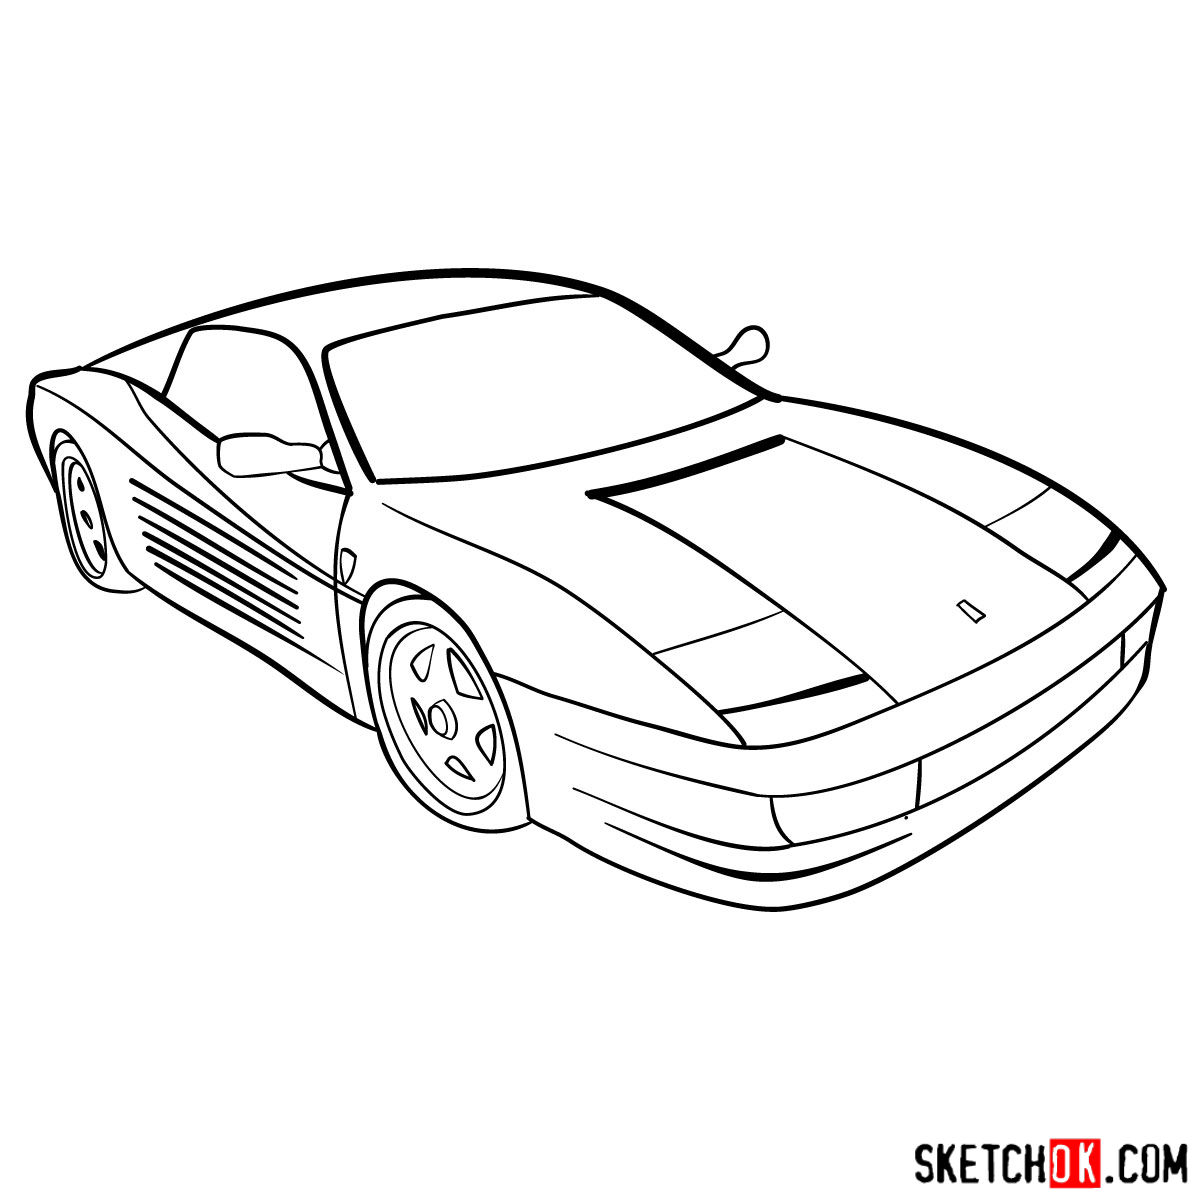 How to draw Ferrari Testarossa supercar - step 09